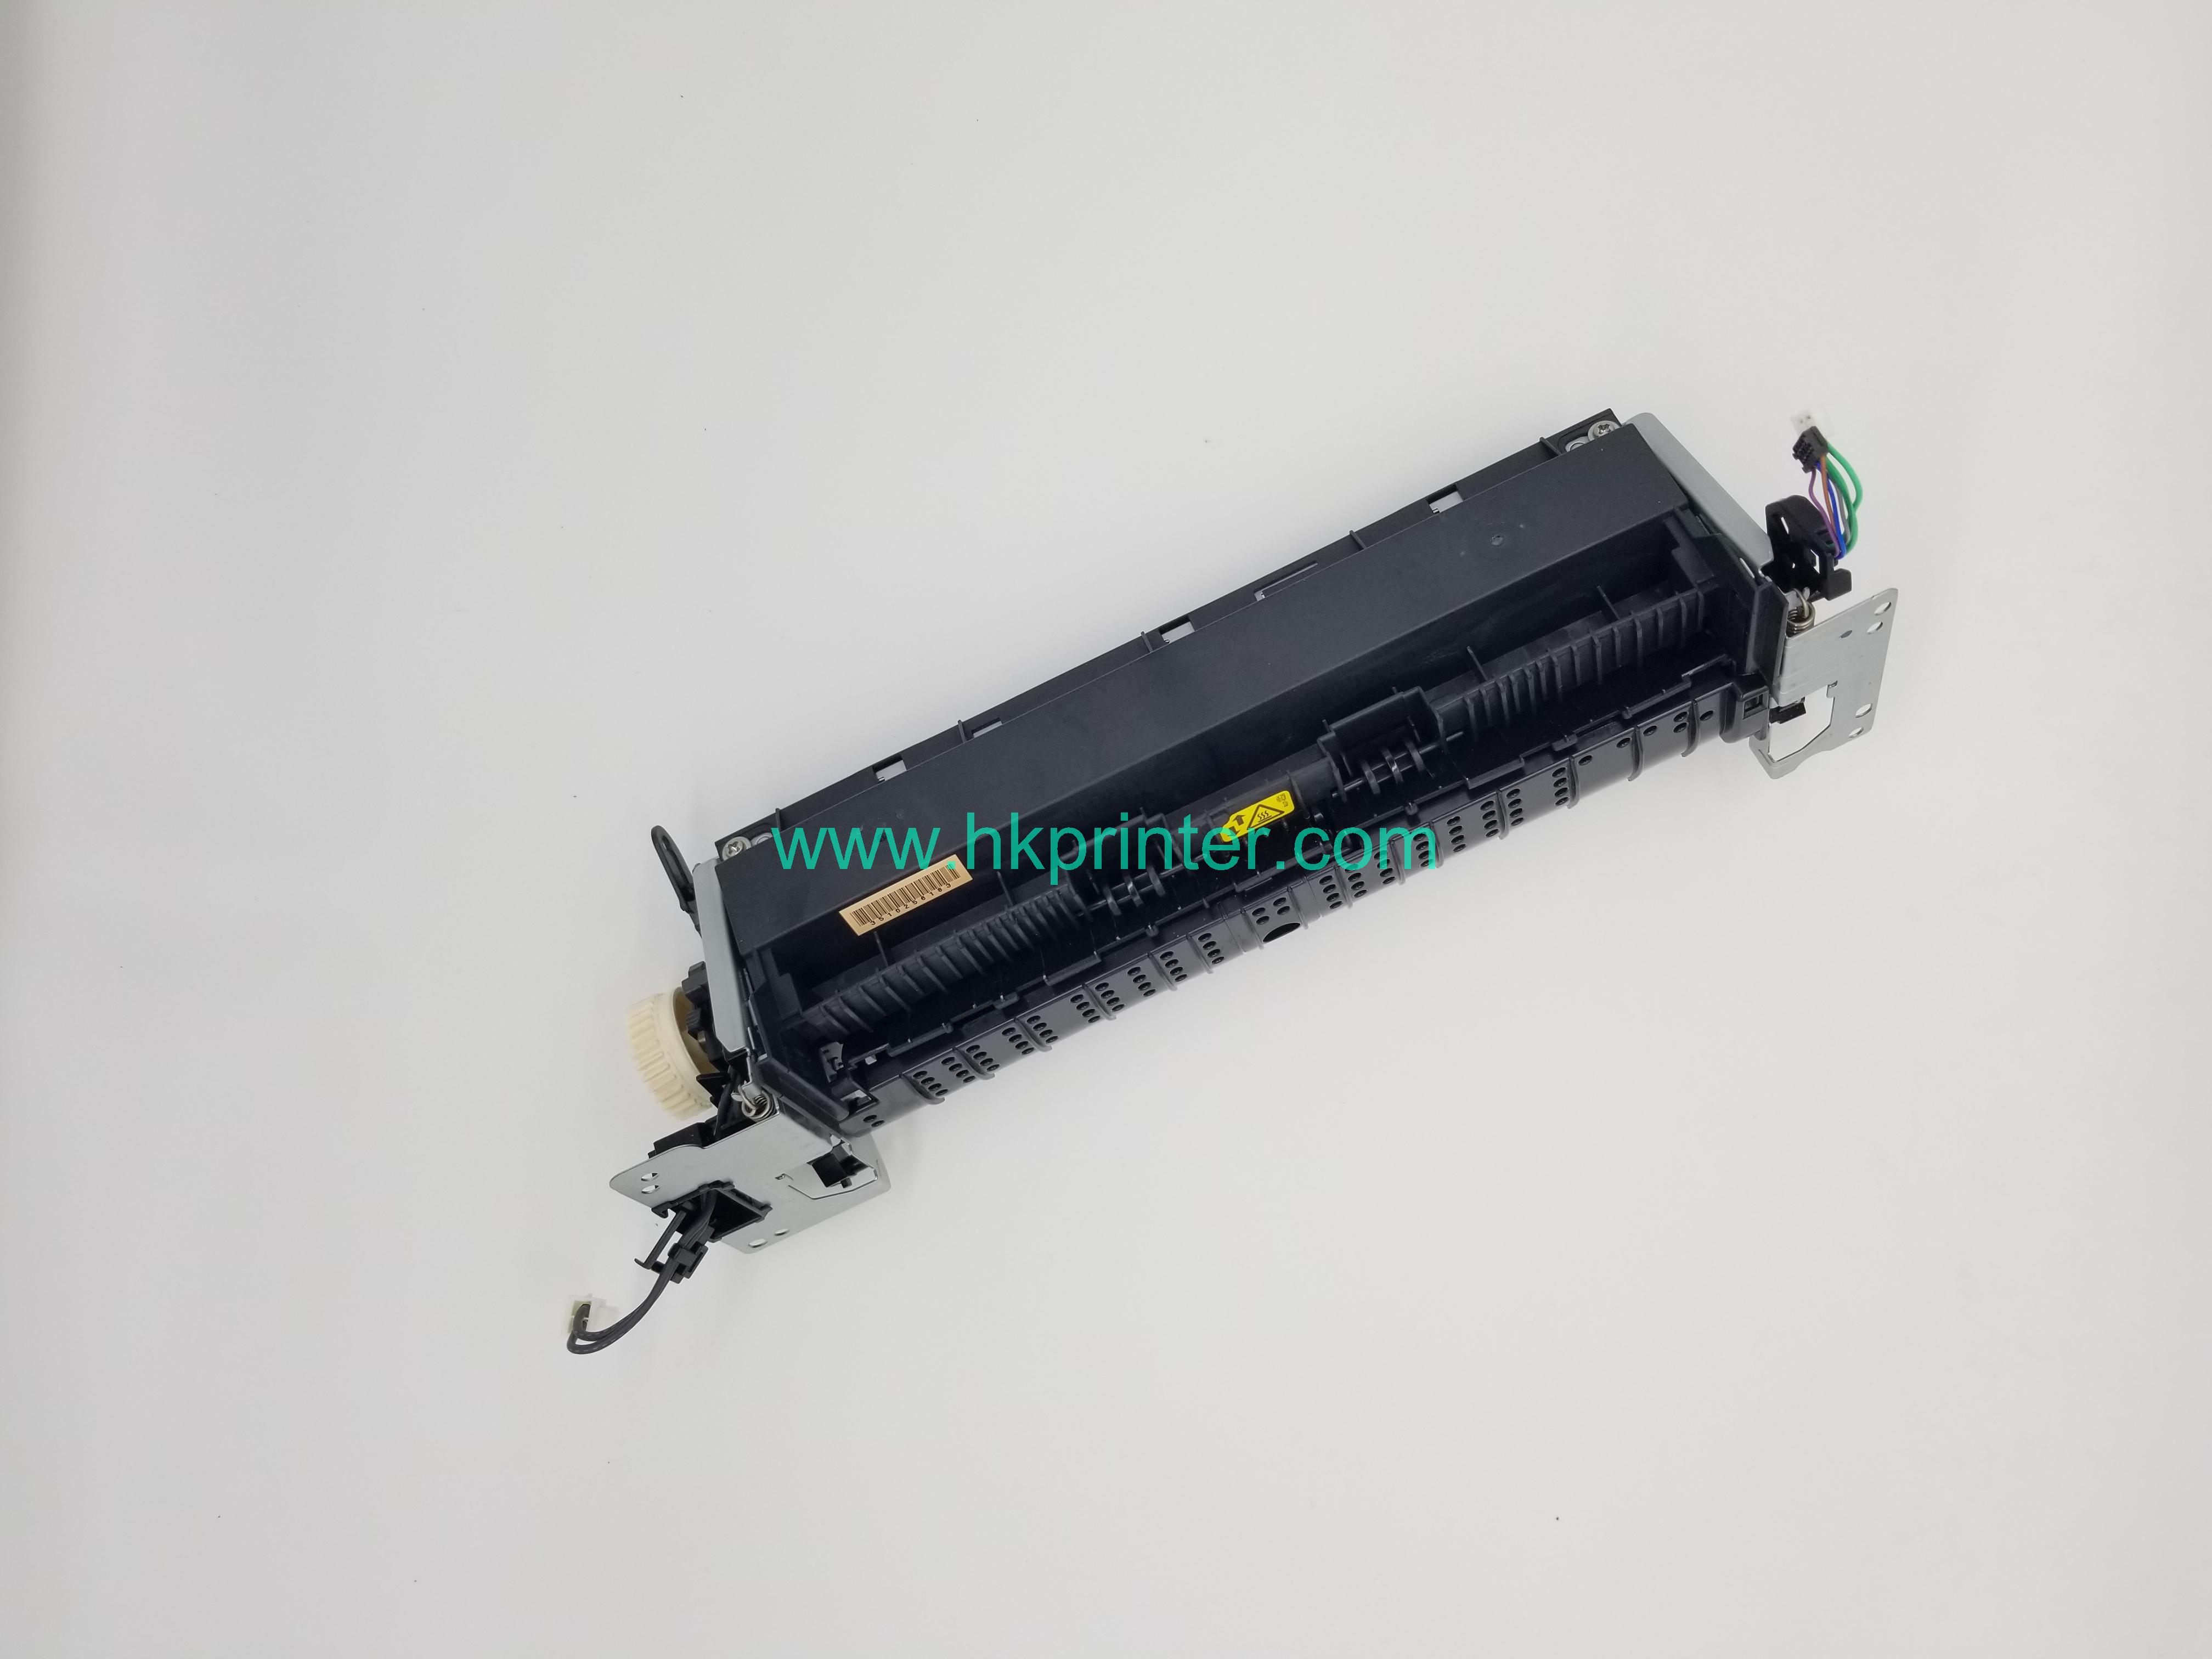 RM2-5425 Fuser Unit 220V for HP LaserJet Pro M402 M403 M426 M427